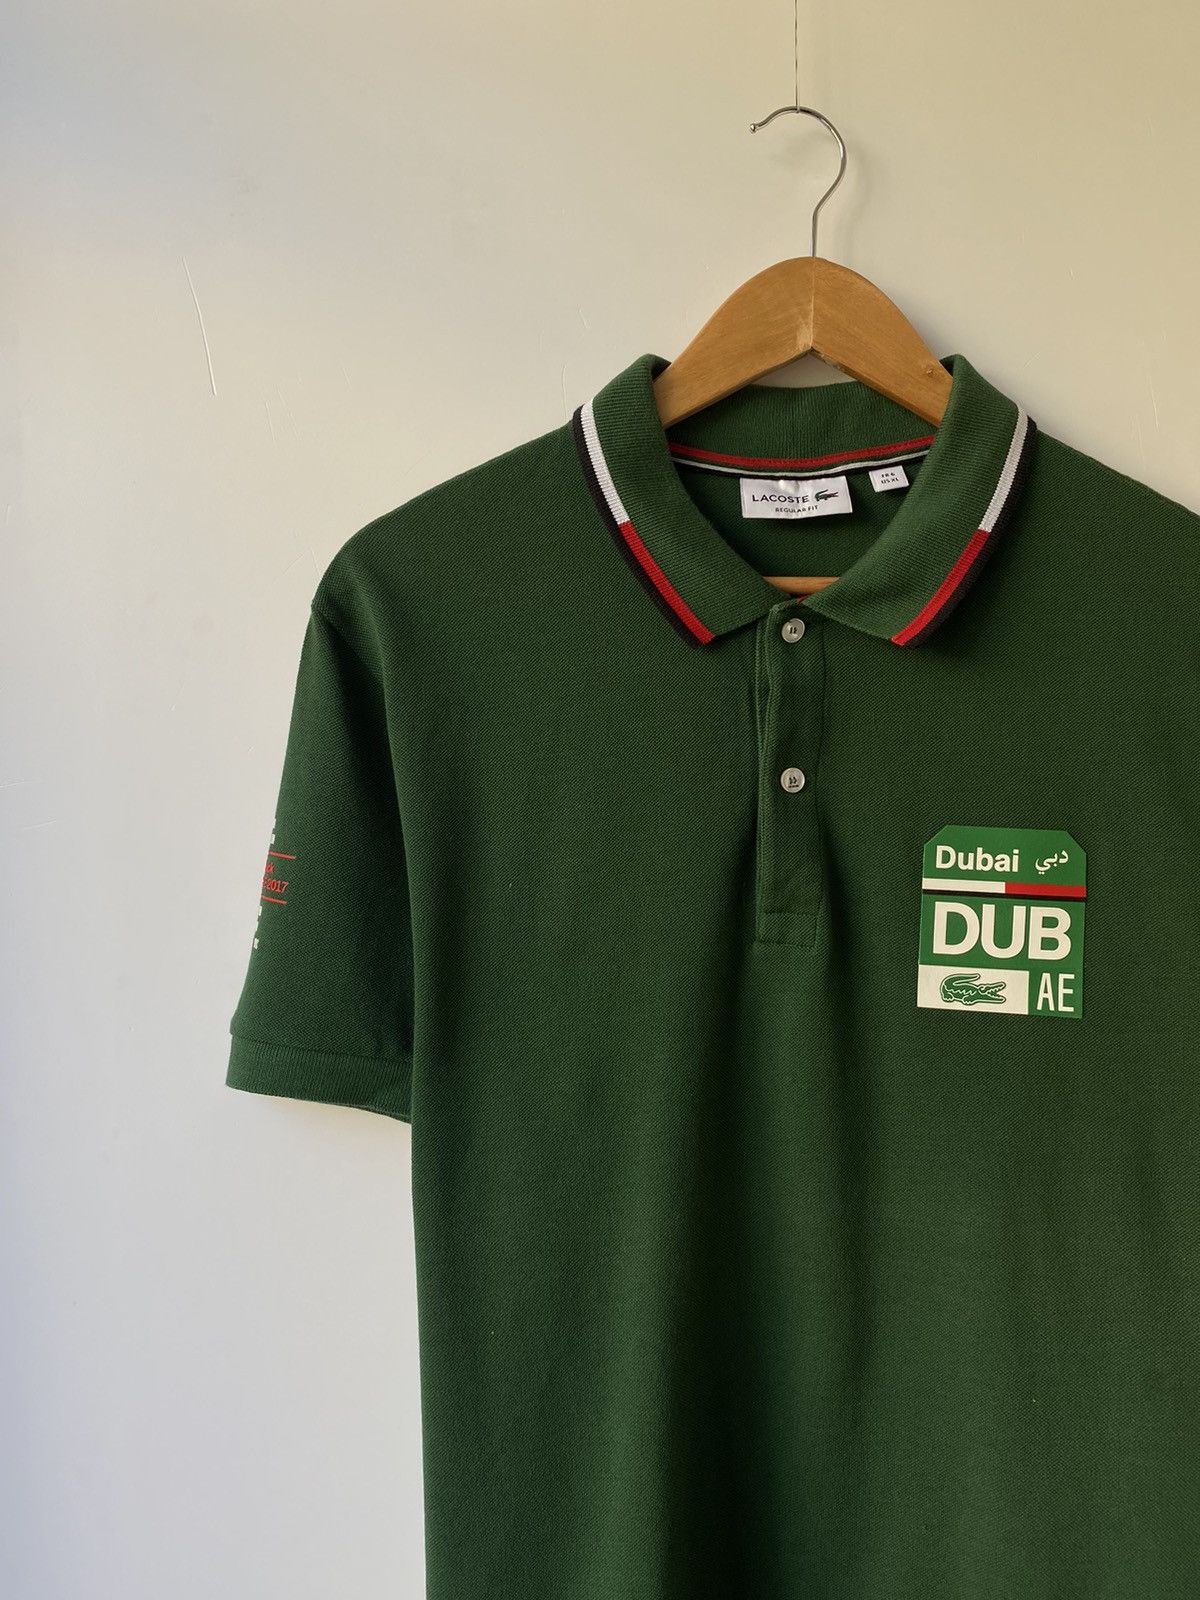 Vintage 🇦🇪 Lacoste Dubai polo t-shirt made in Marocco retro rare hype ...